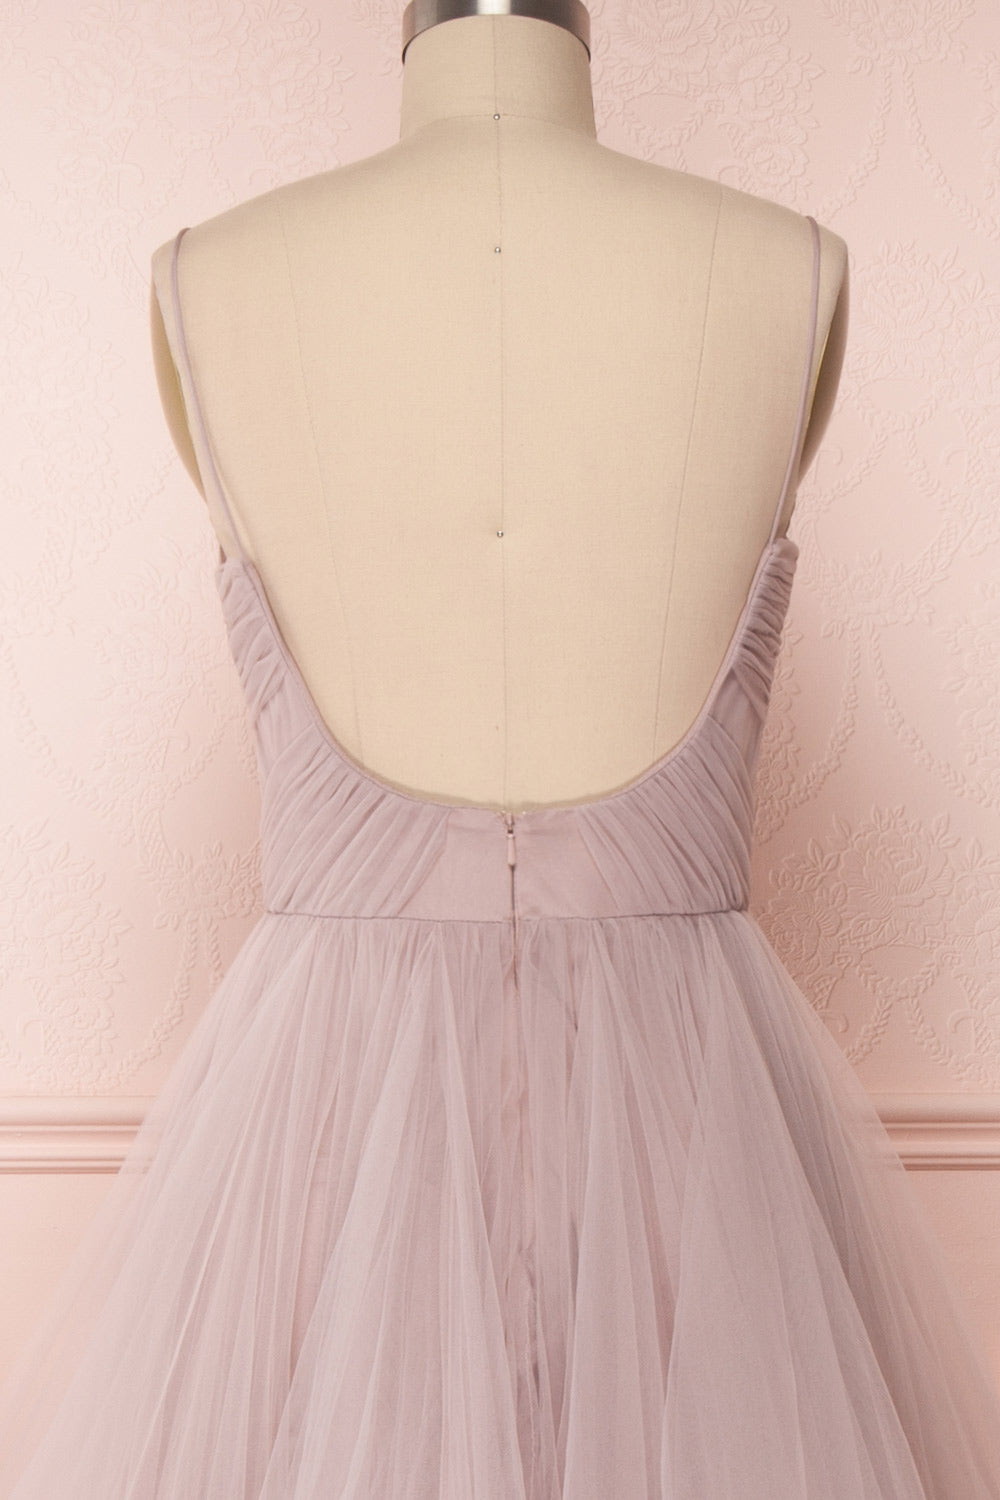 Ochobo | Lilac Tulle Gown